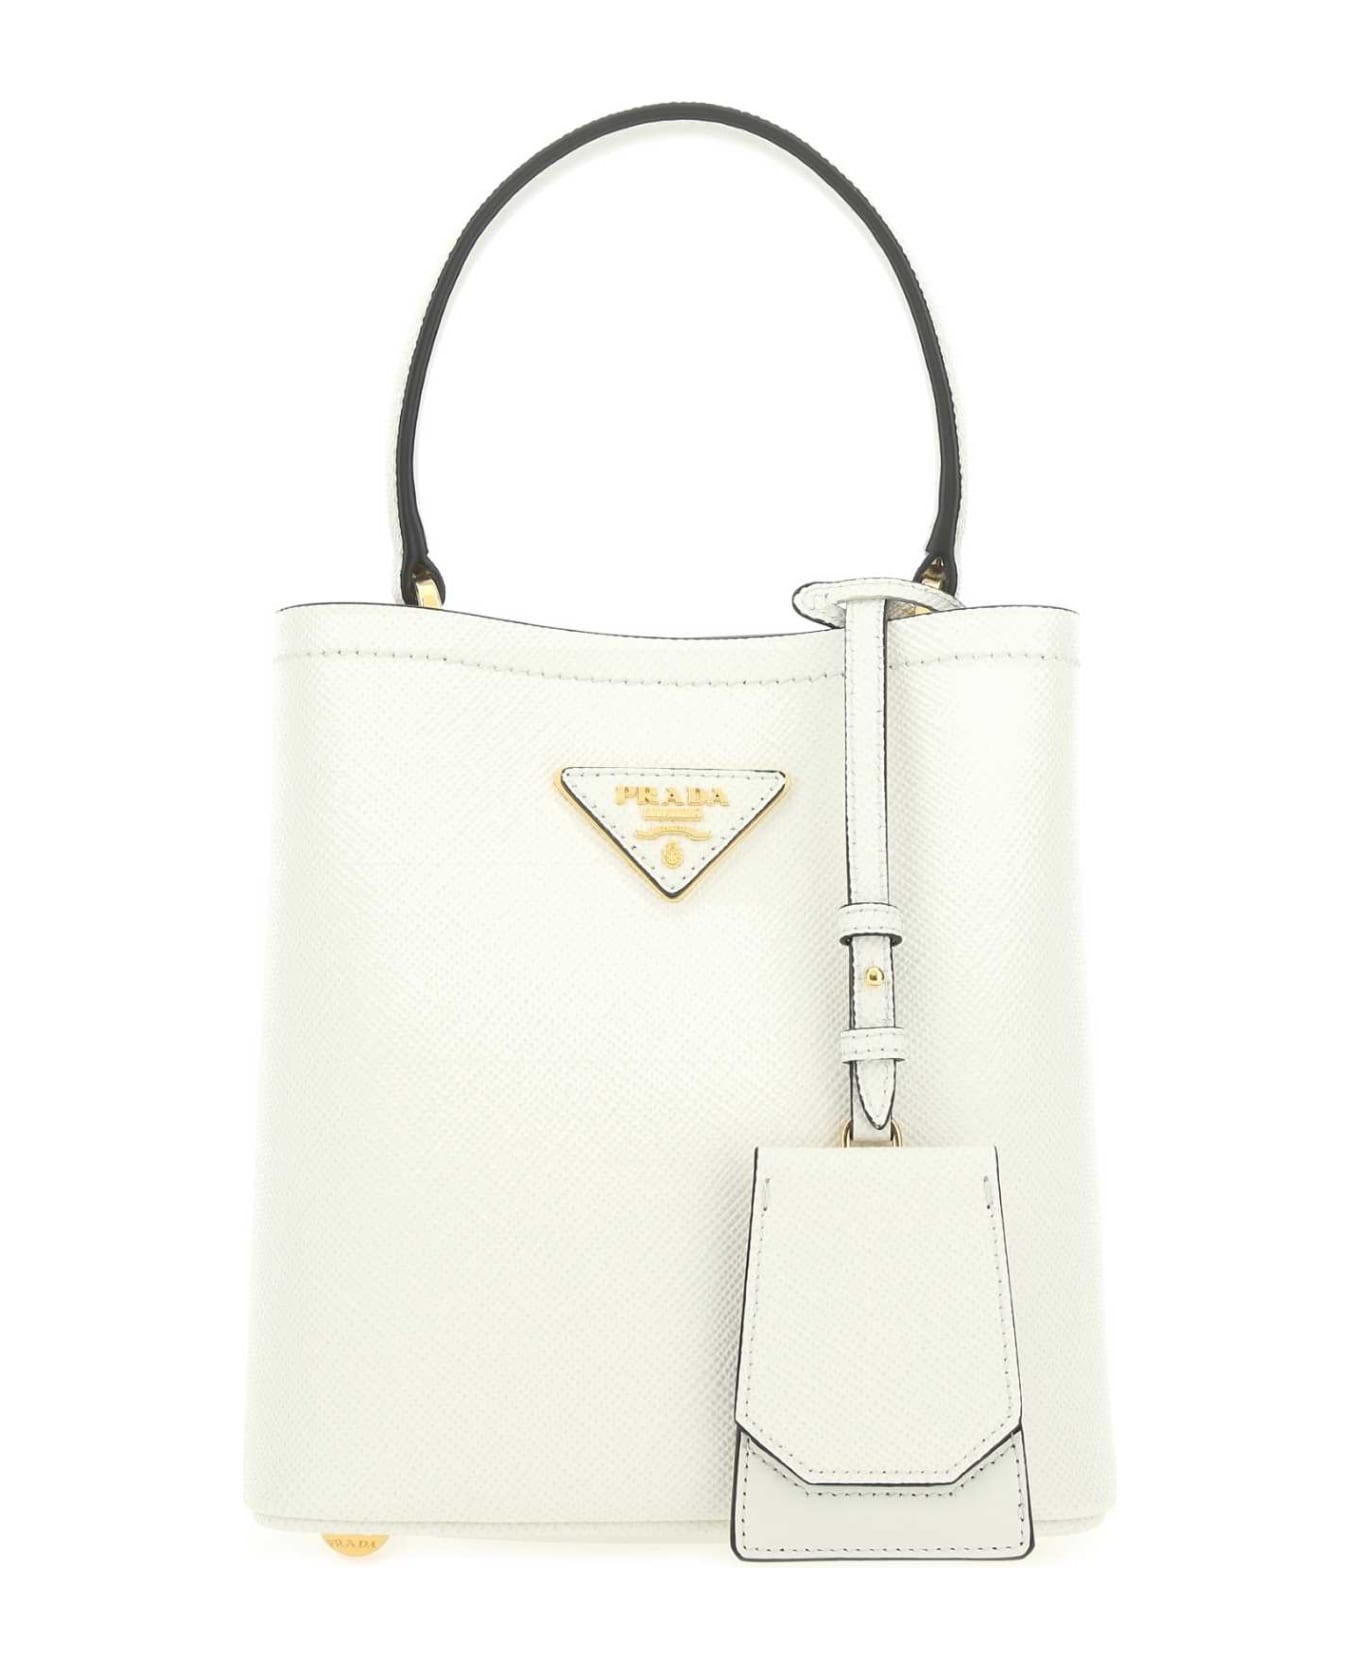 Prada White Leather Small Panier Handbag - F0G3Z